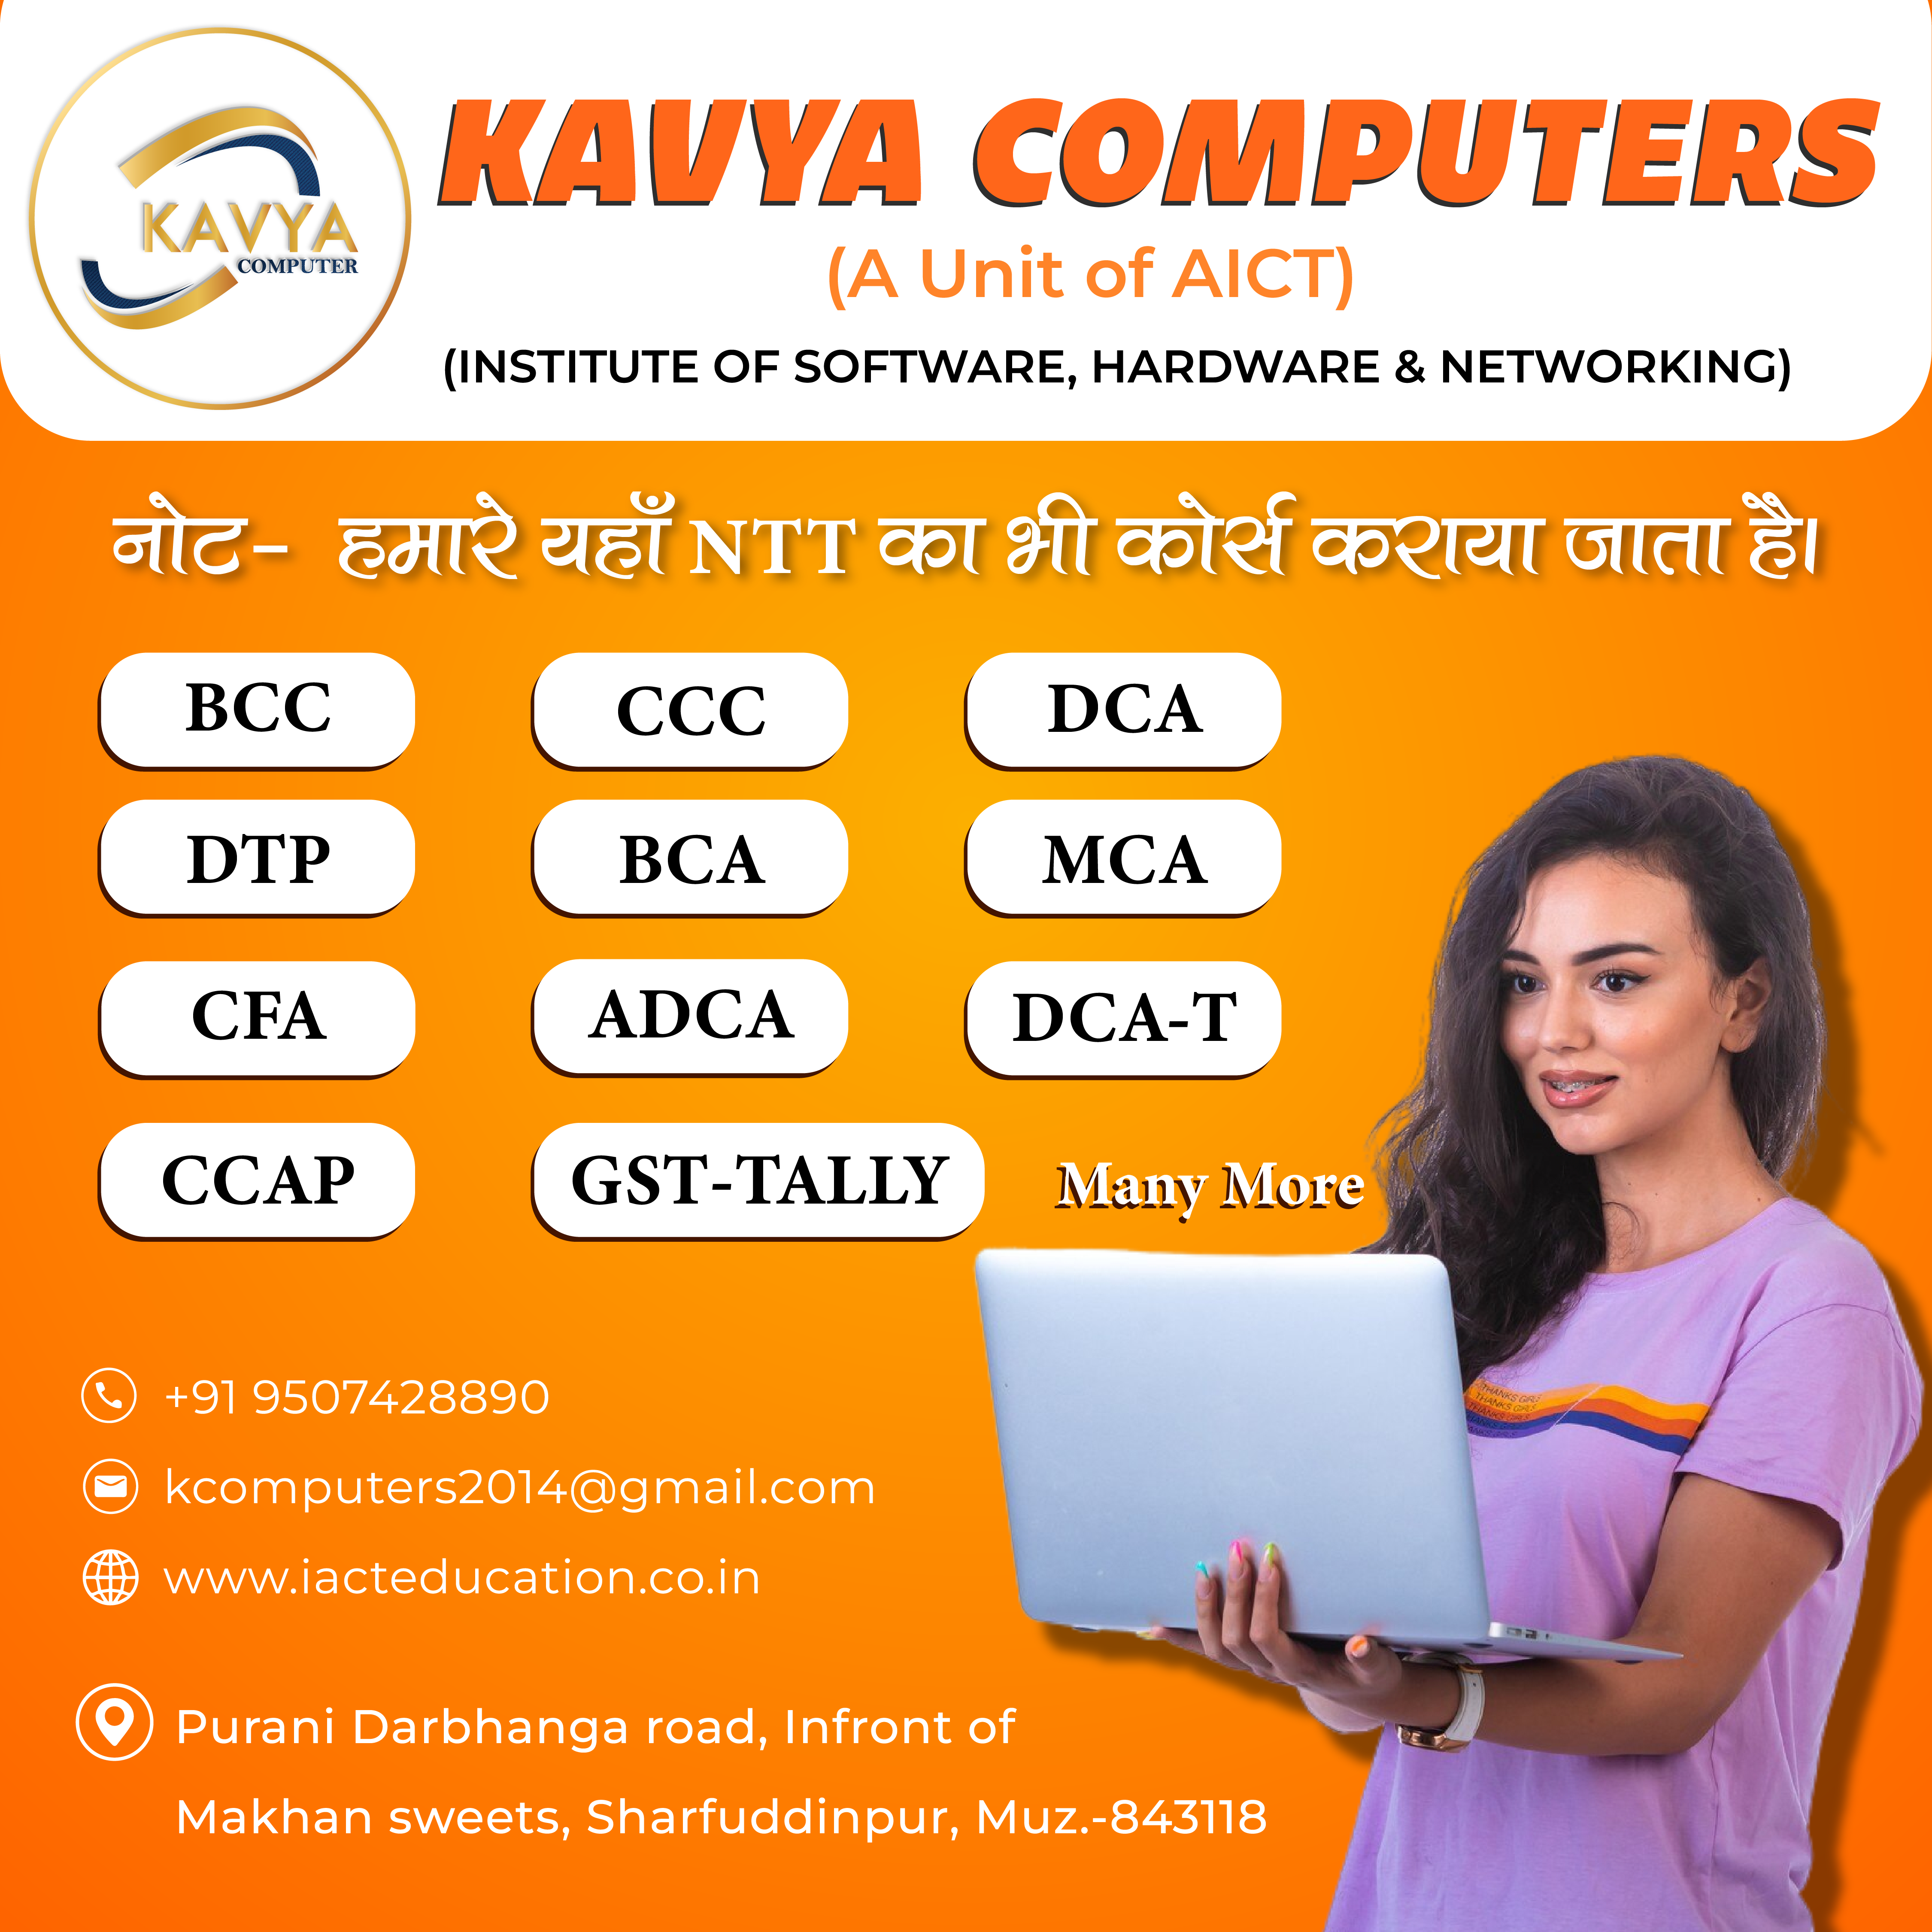 Kavya Computer single feature